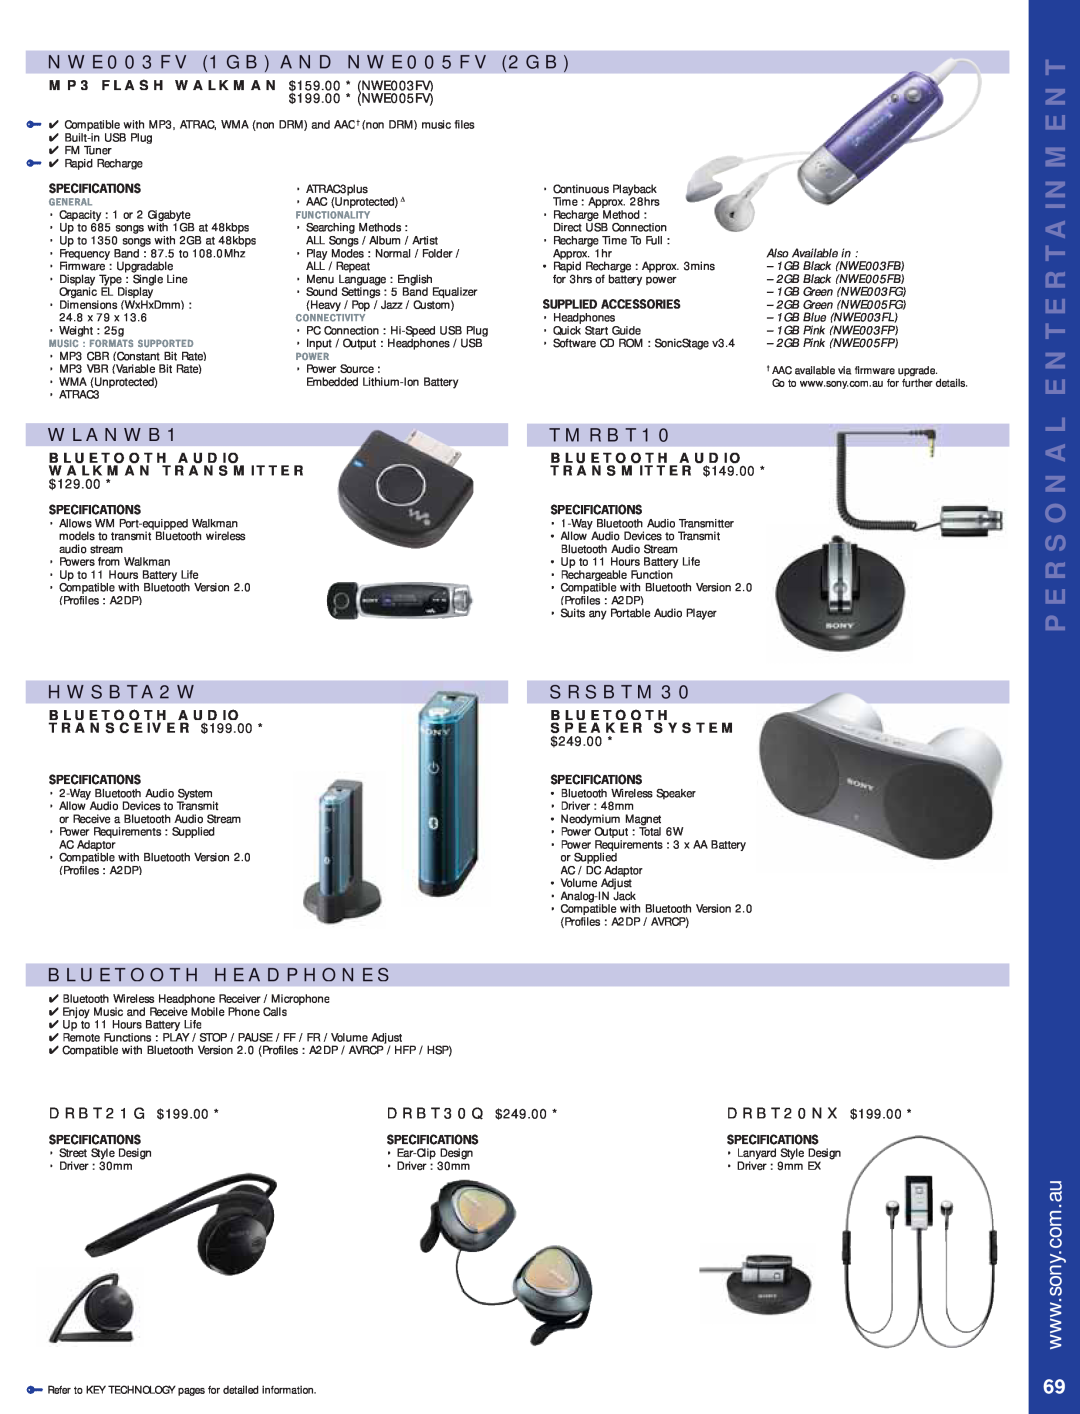 Sony Bravia LCD TV NWE003FV 1GB AND NWE005FV 2GB, WLANWB1, TMRBT10, HWSBTA2W, SRSBTM30, Bluetooth Headphones, $129.00 